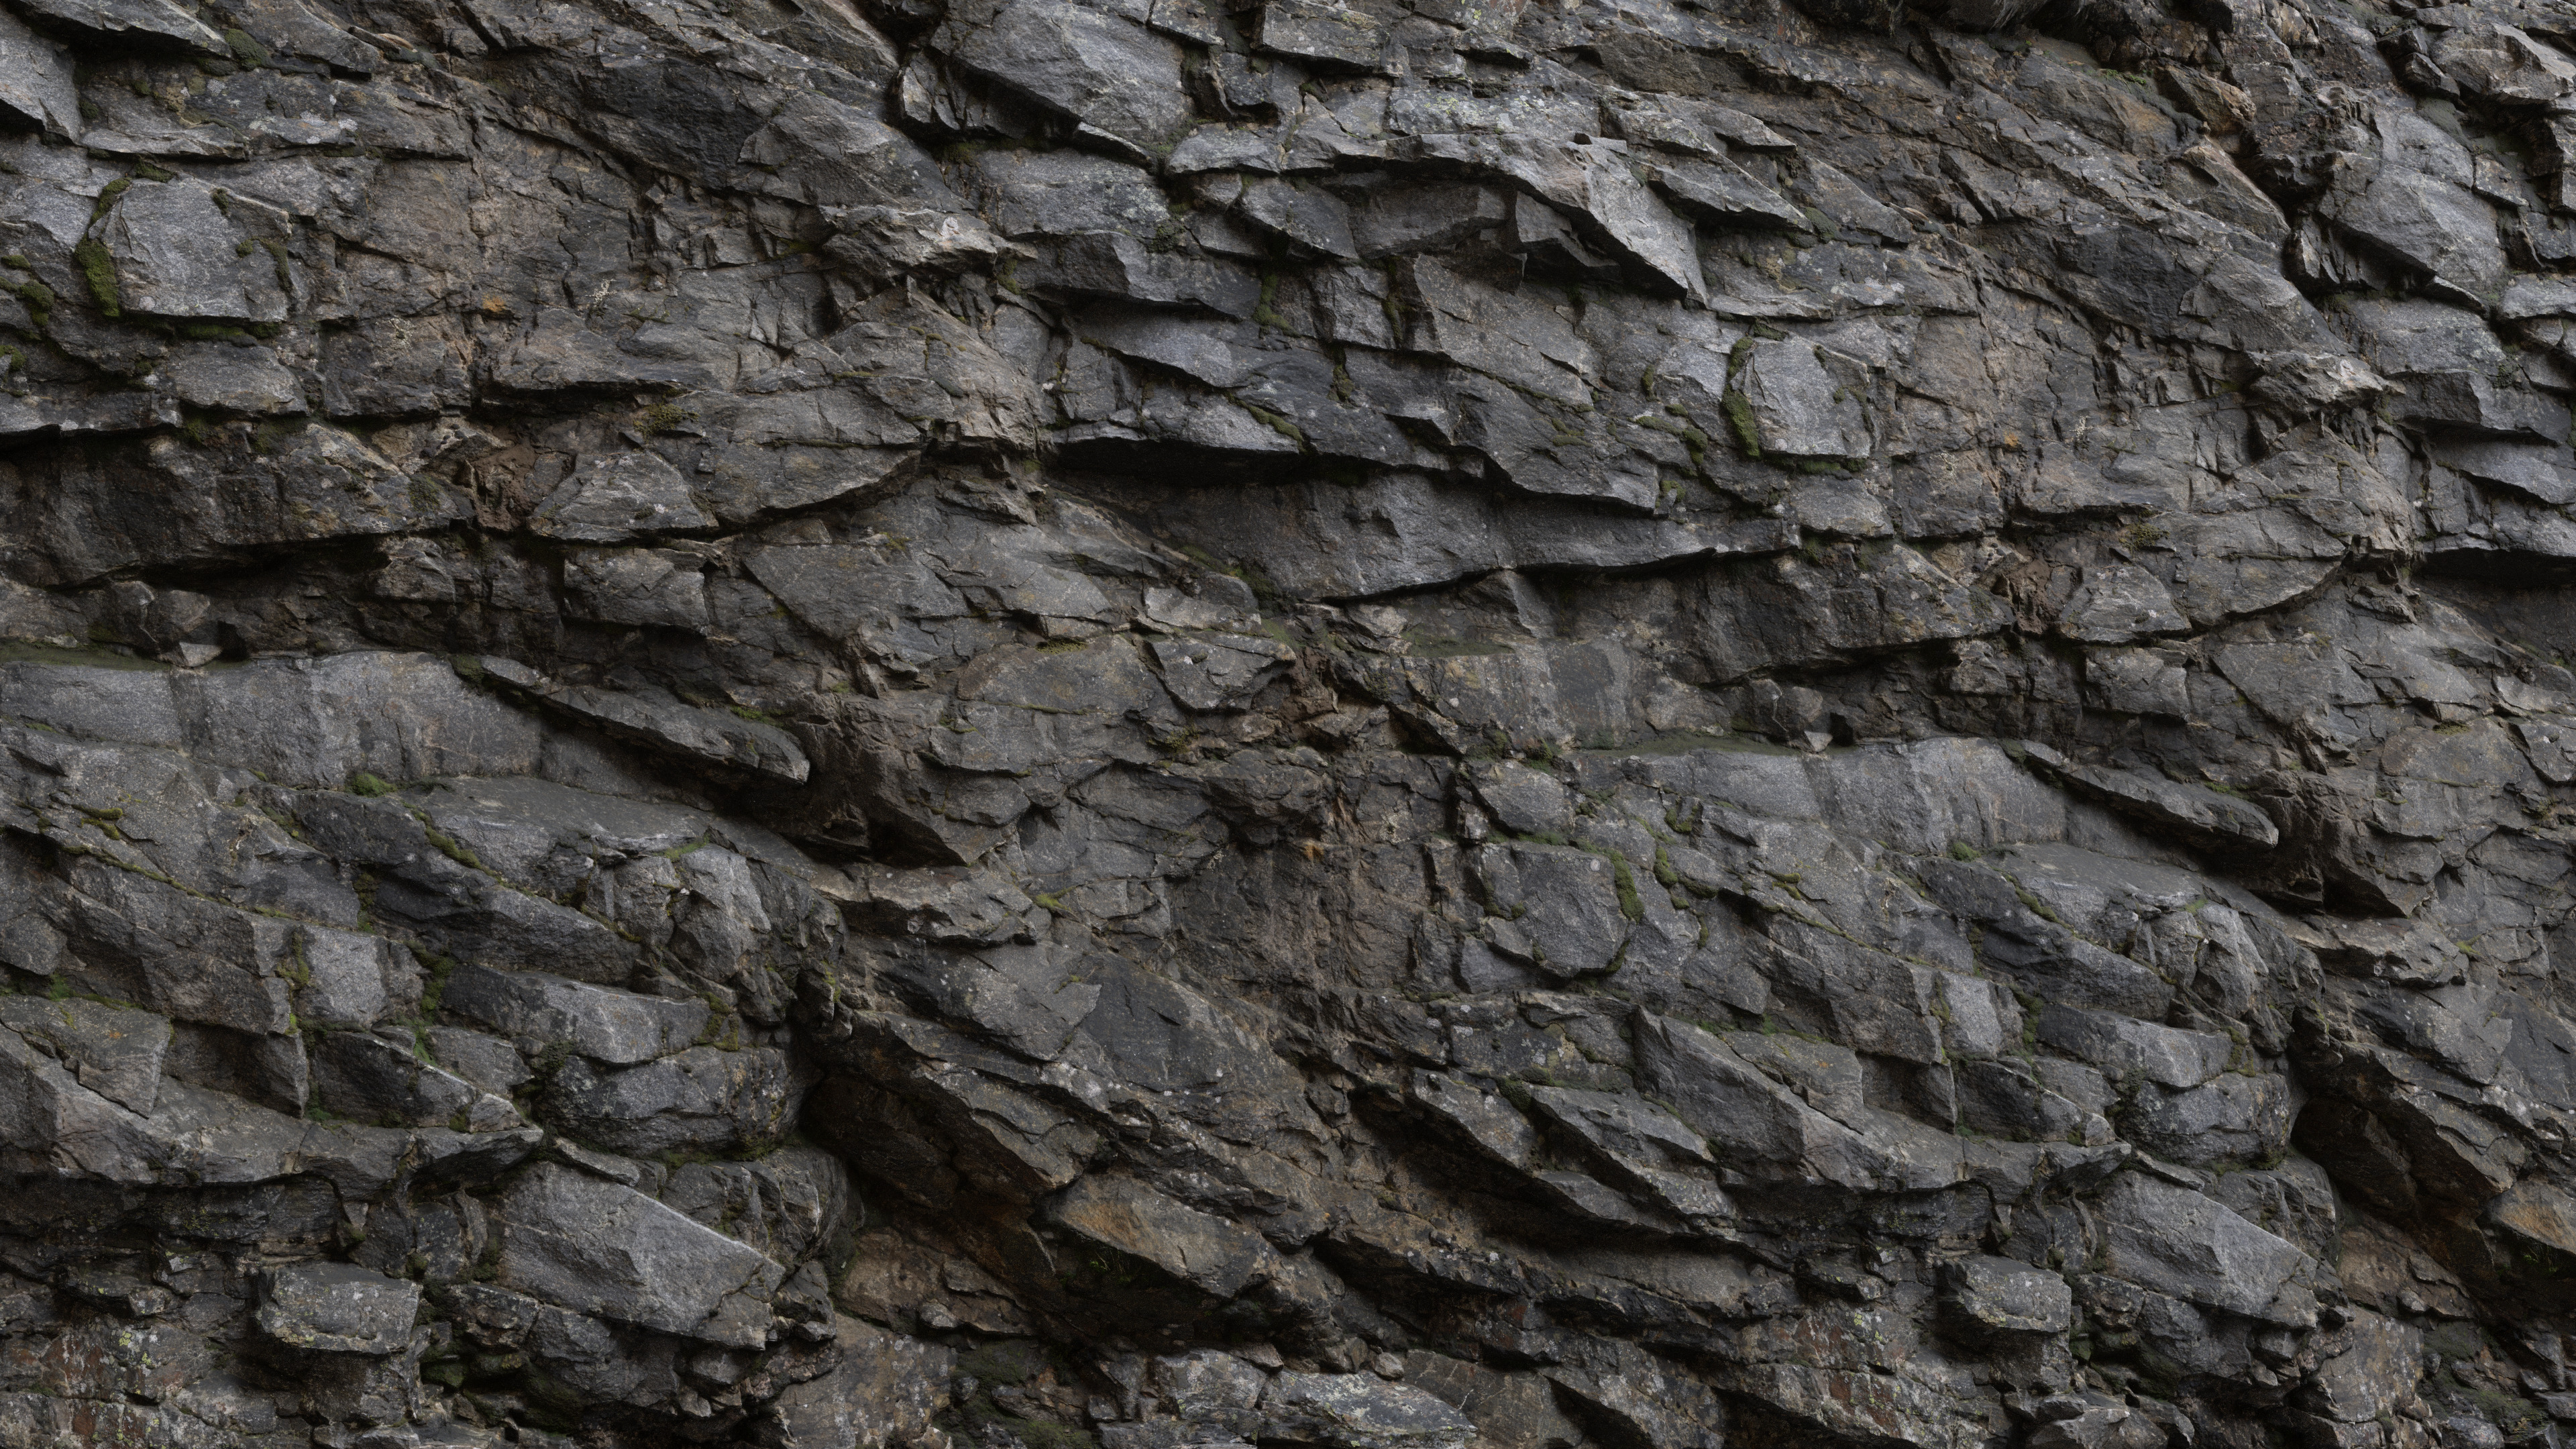 3D Scanned Cliff Rock  2x2 meters